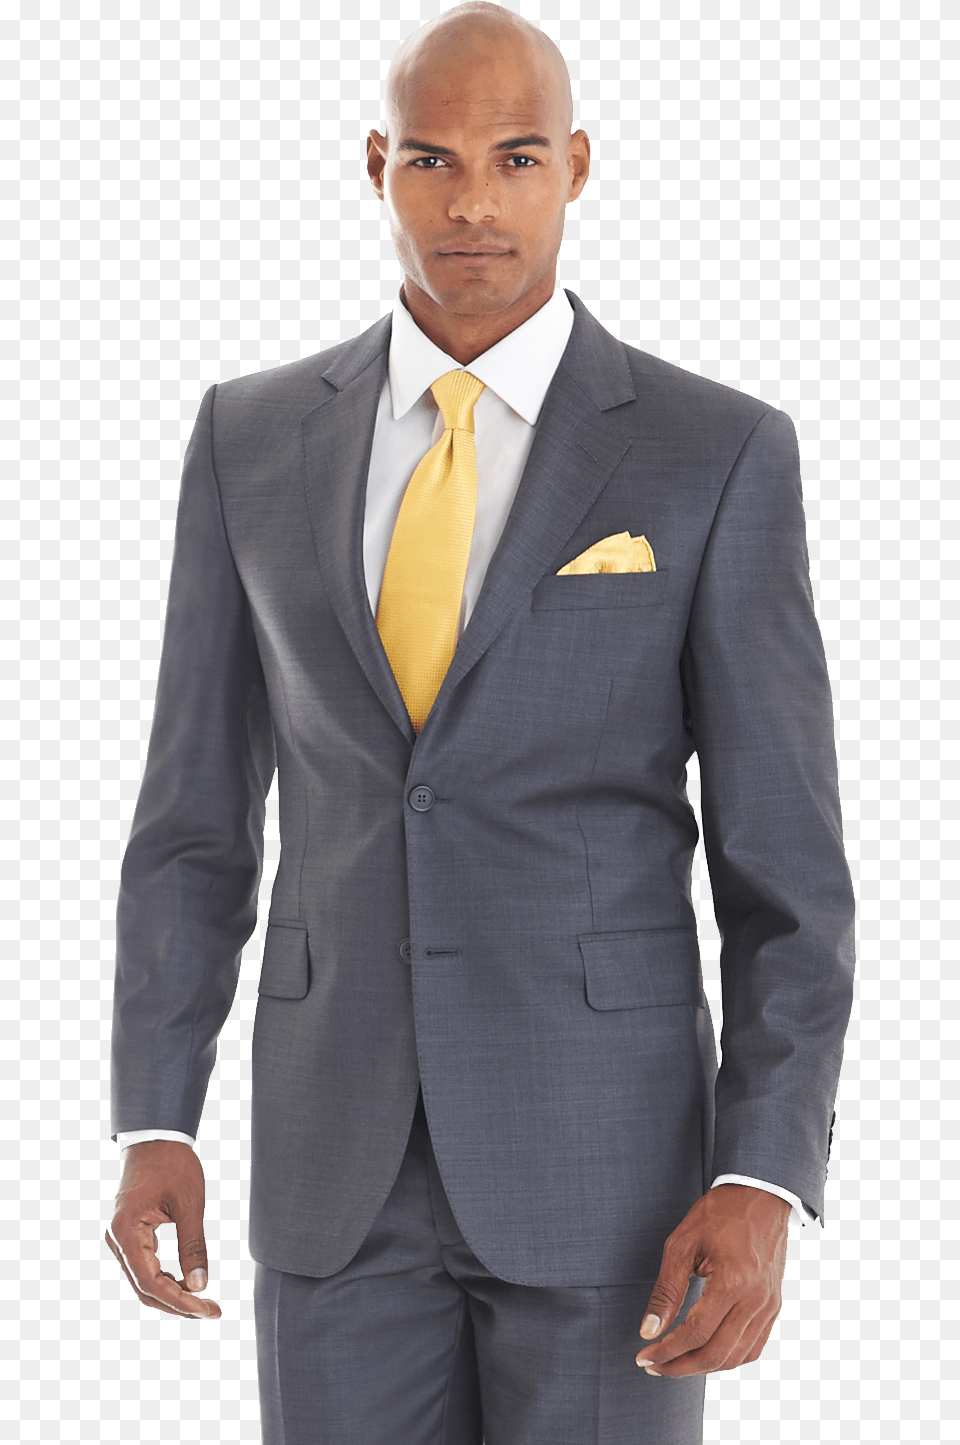 Accessories, Tie, Suit, Jacket Png Image